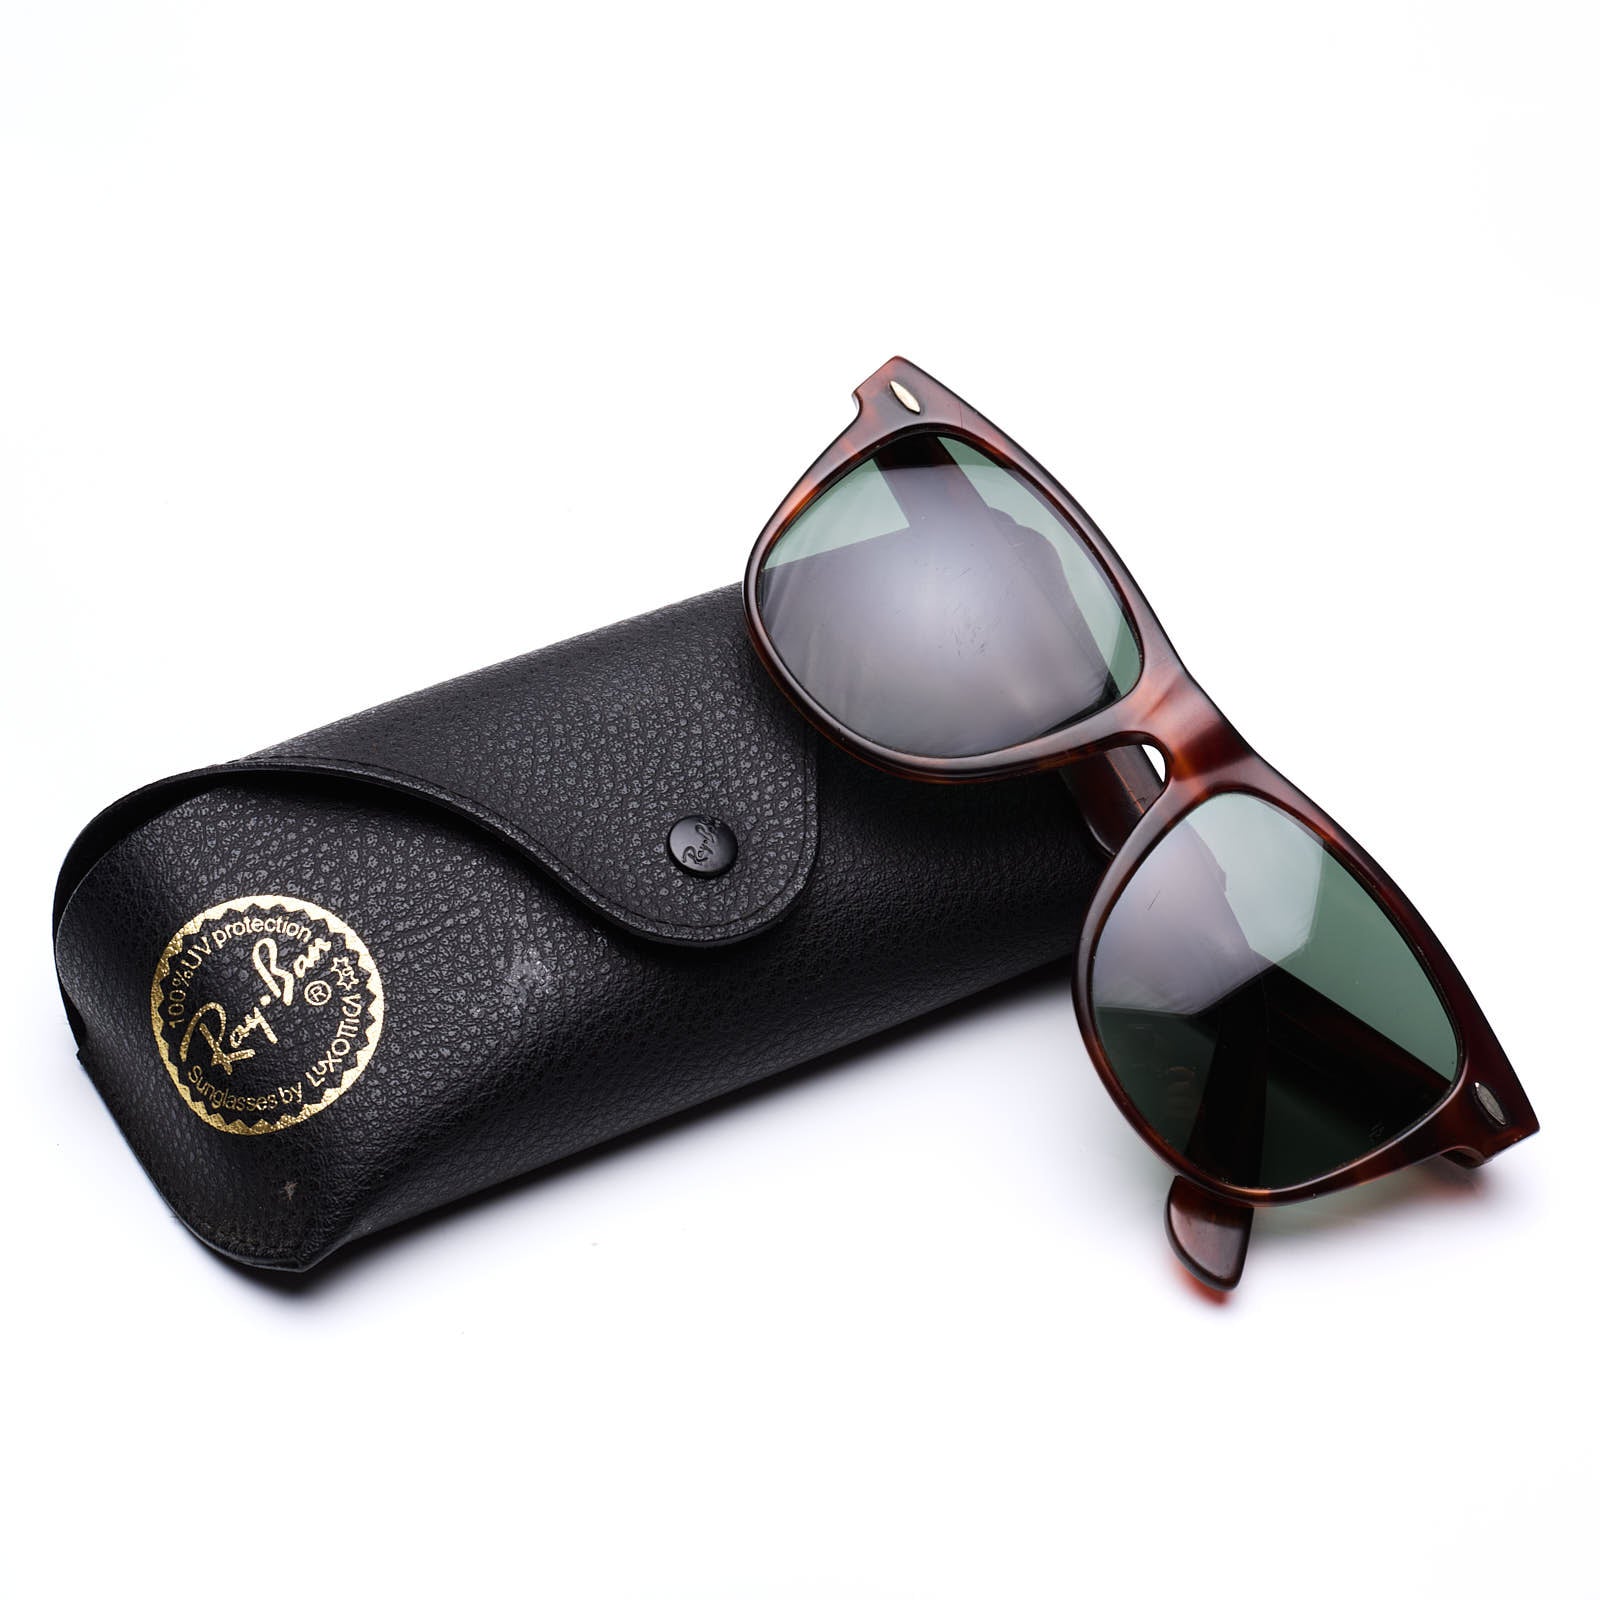 Vintage B&L RAY BAN Wayfarer II Tortoise Gray G-15 Lenses Sunglasses